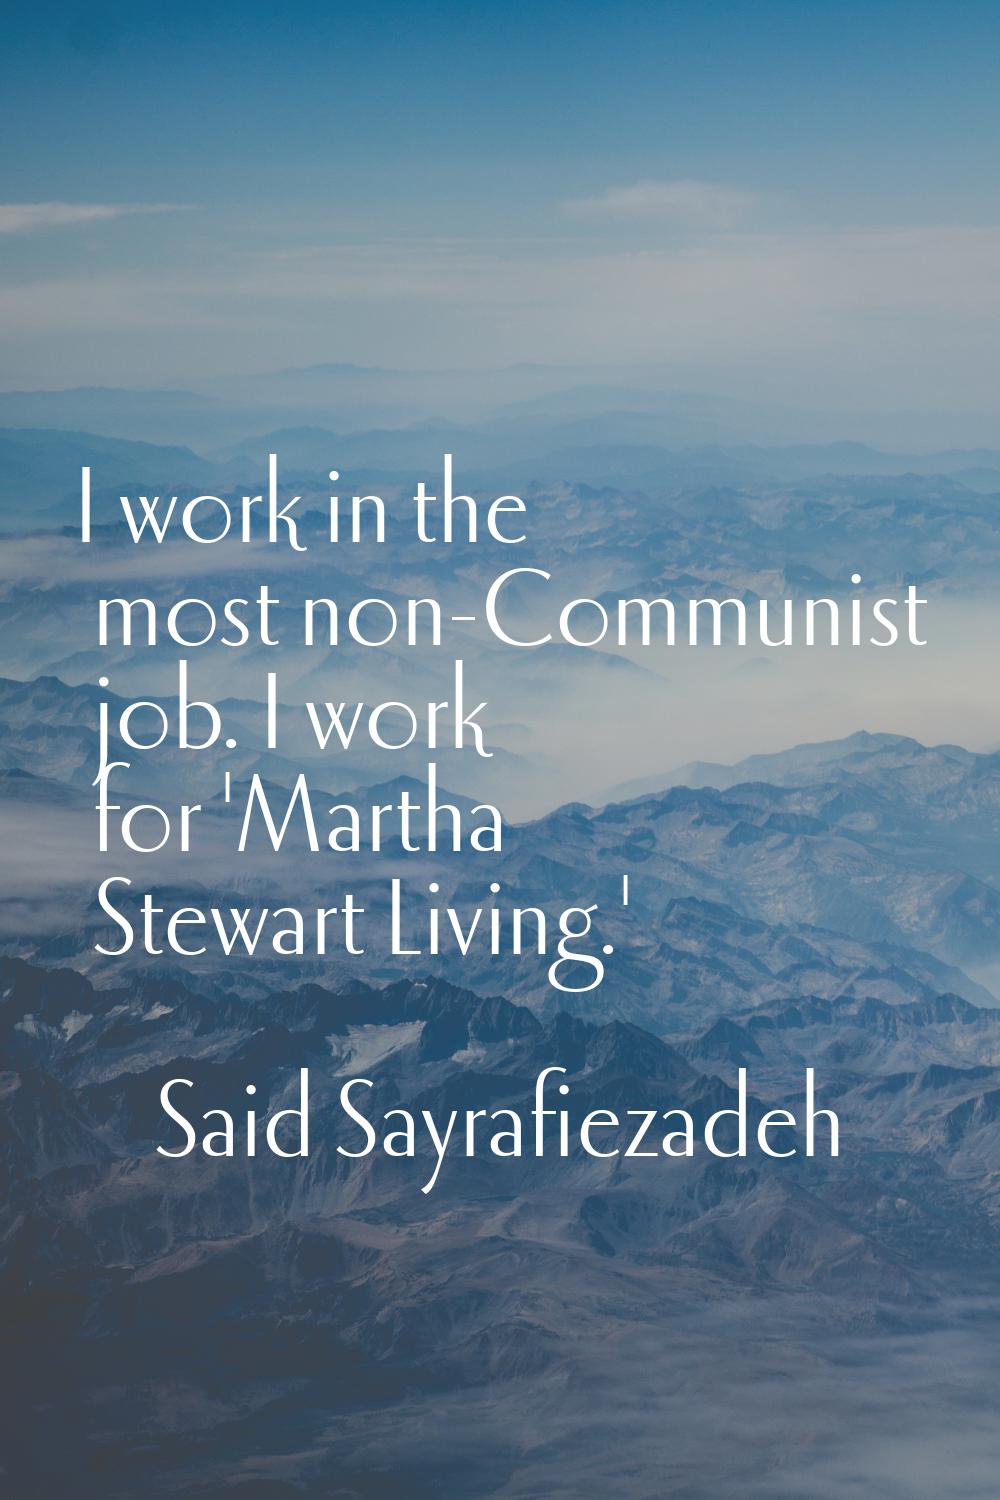 I work in the most non-Communist job. I work for 'Martha Stewart Living.'